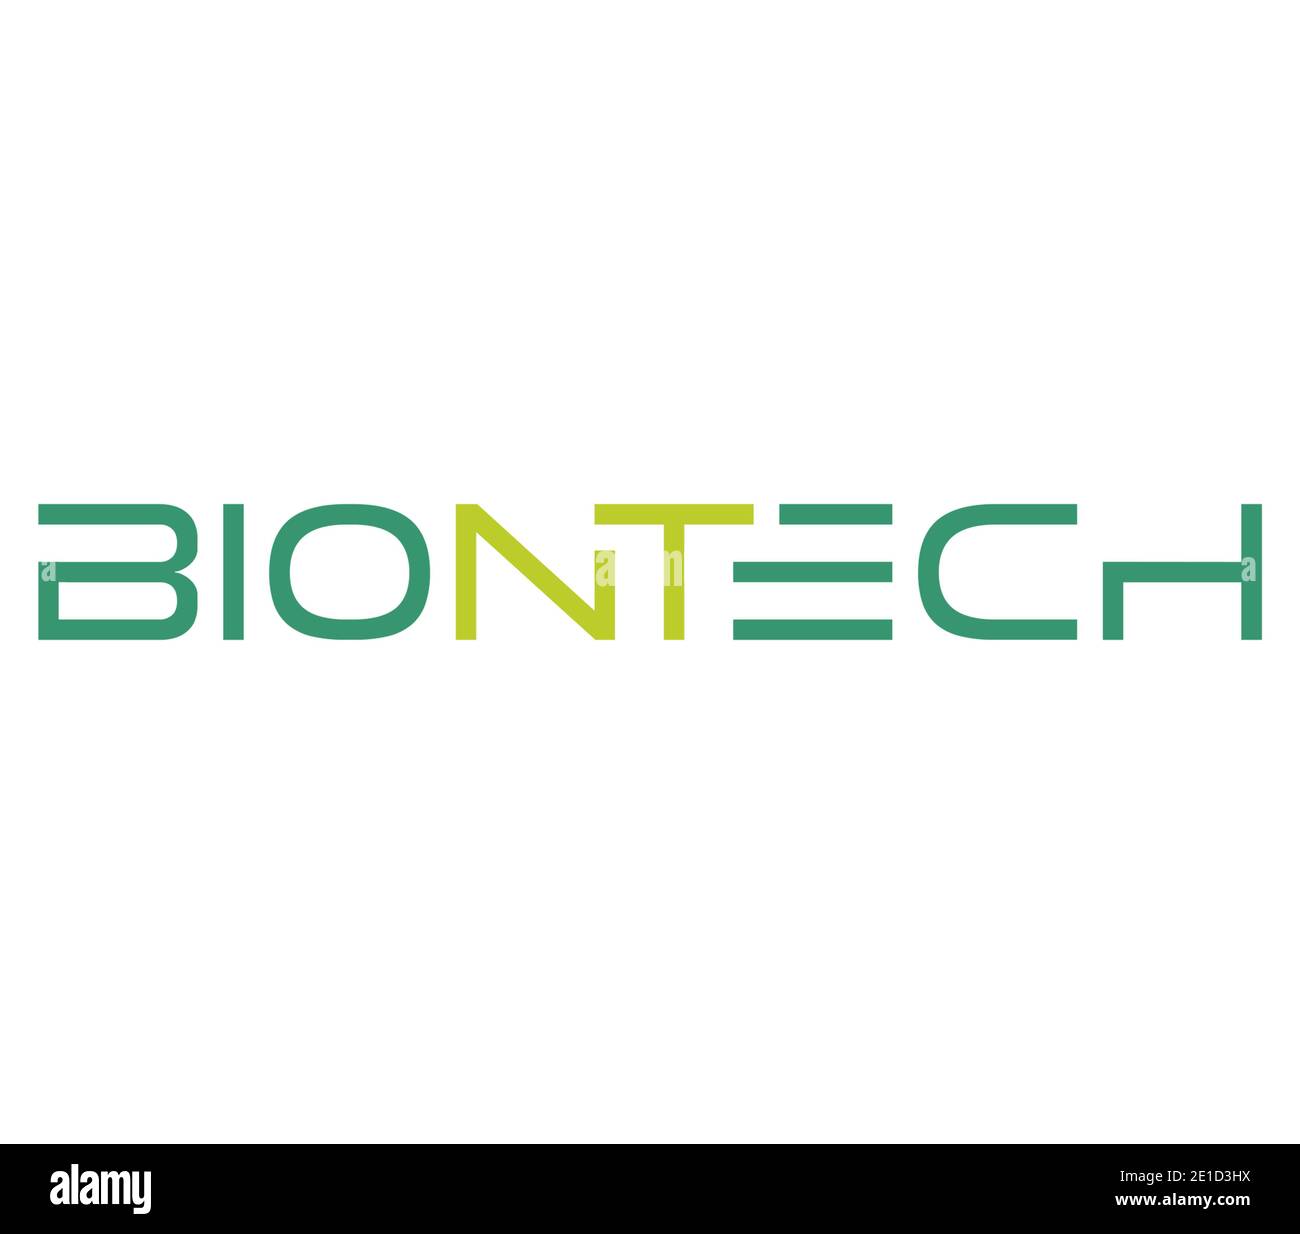 Biontech icon Stock Photo